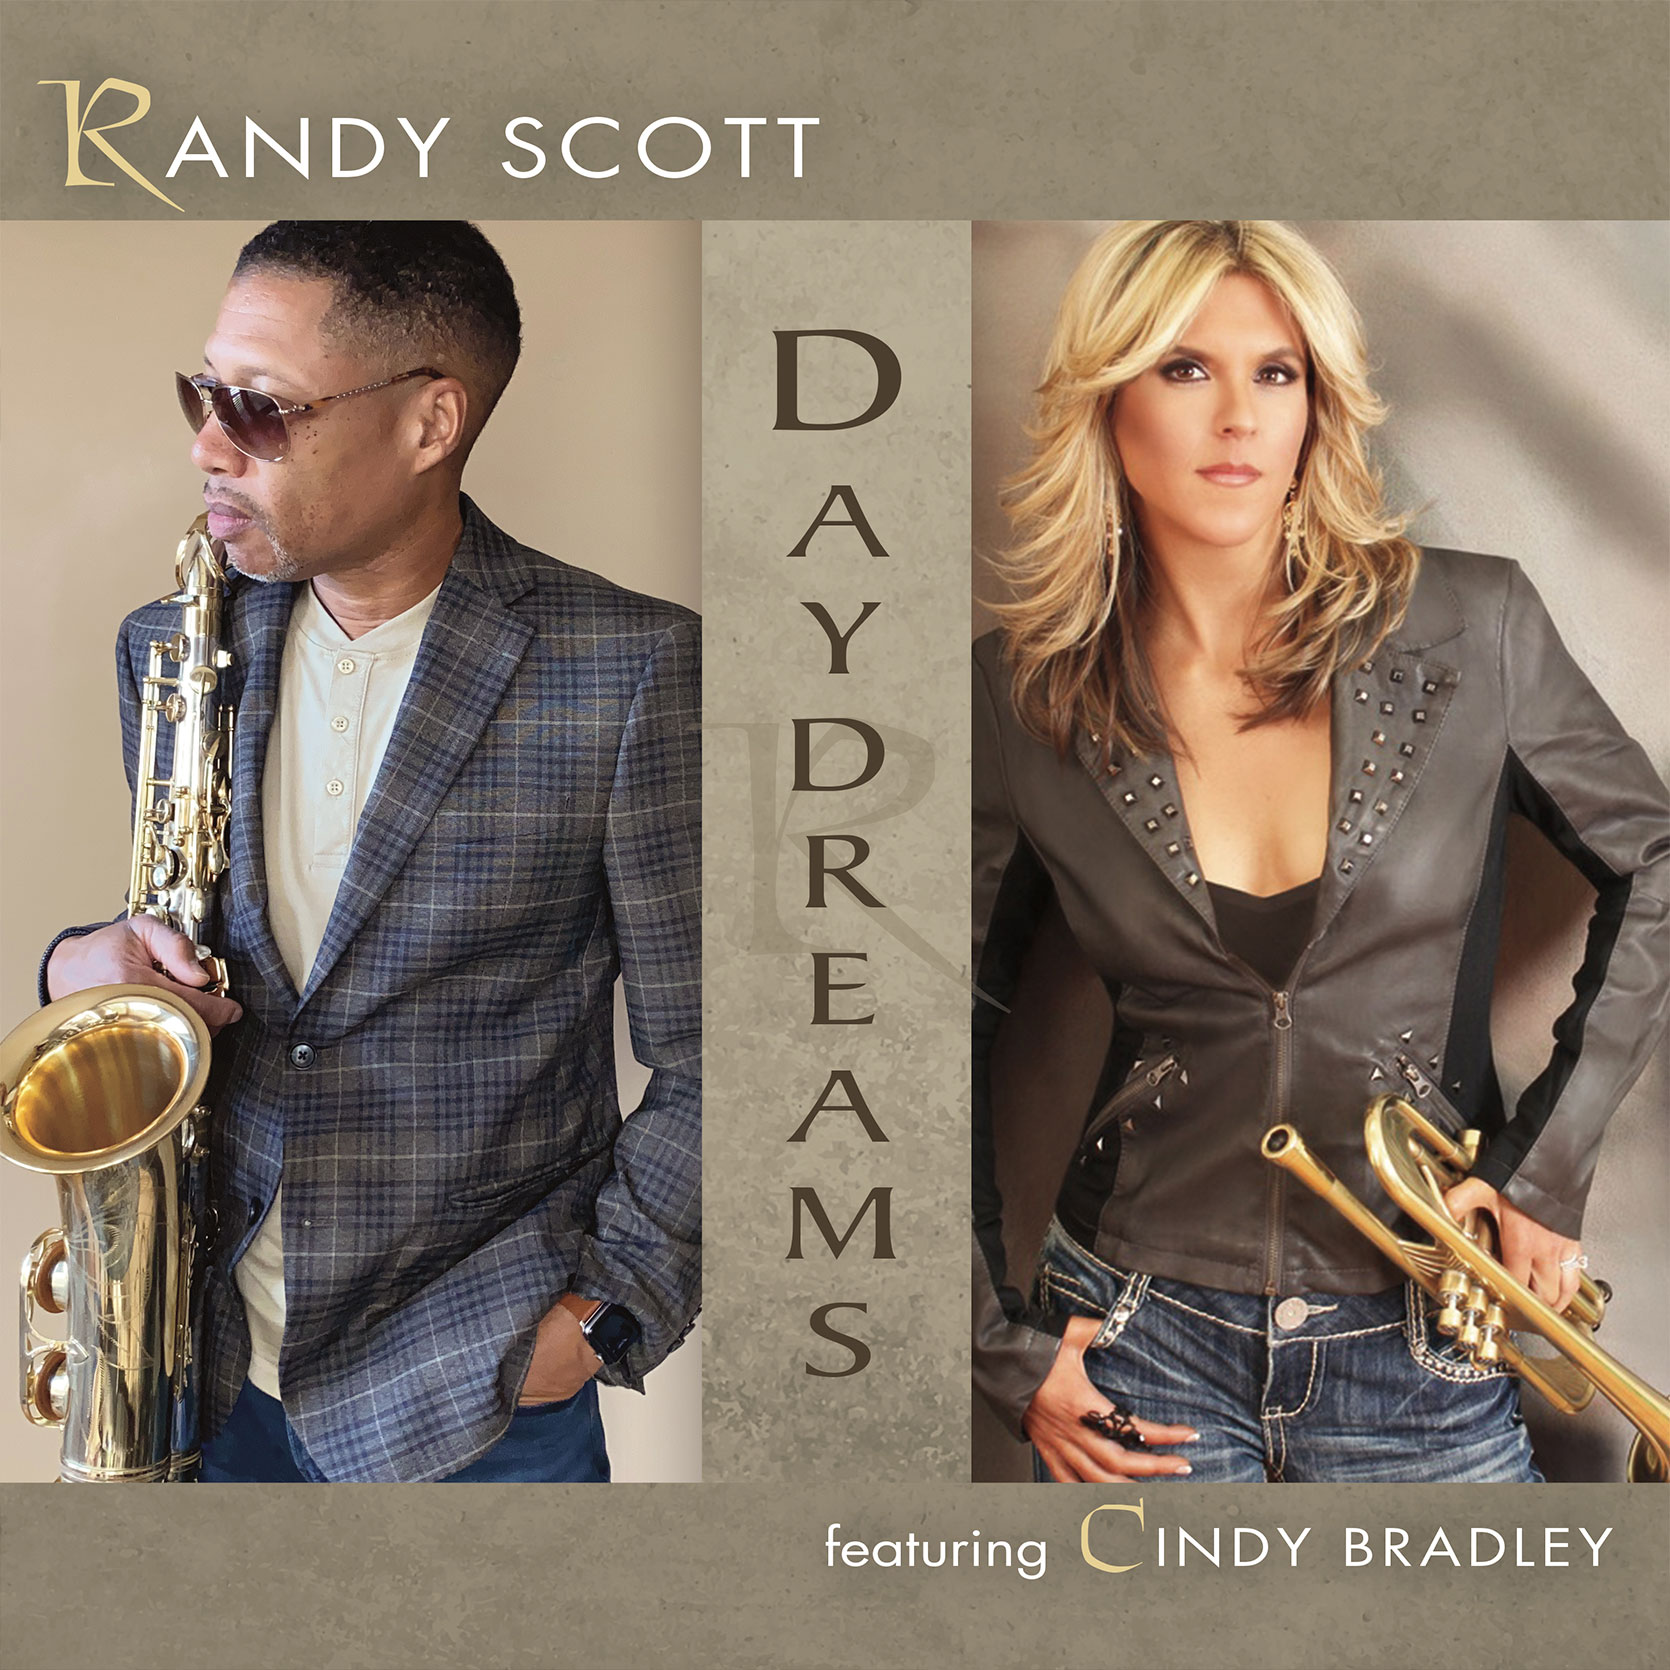 Listen to Daydreams by Smooth Jazz recording artist Randy Scott featuring Cindy Bradley